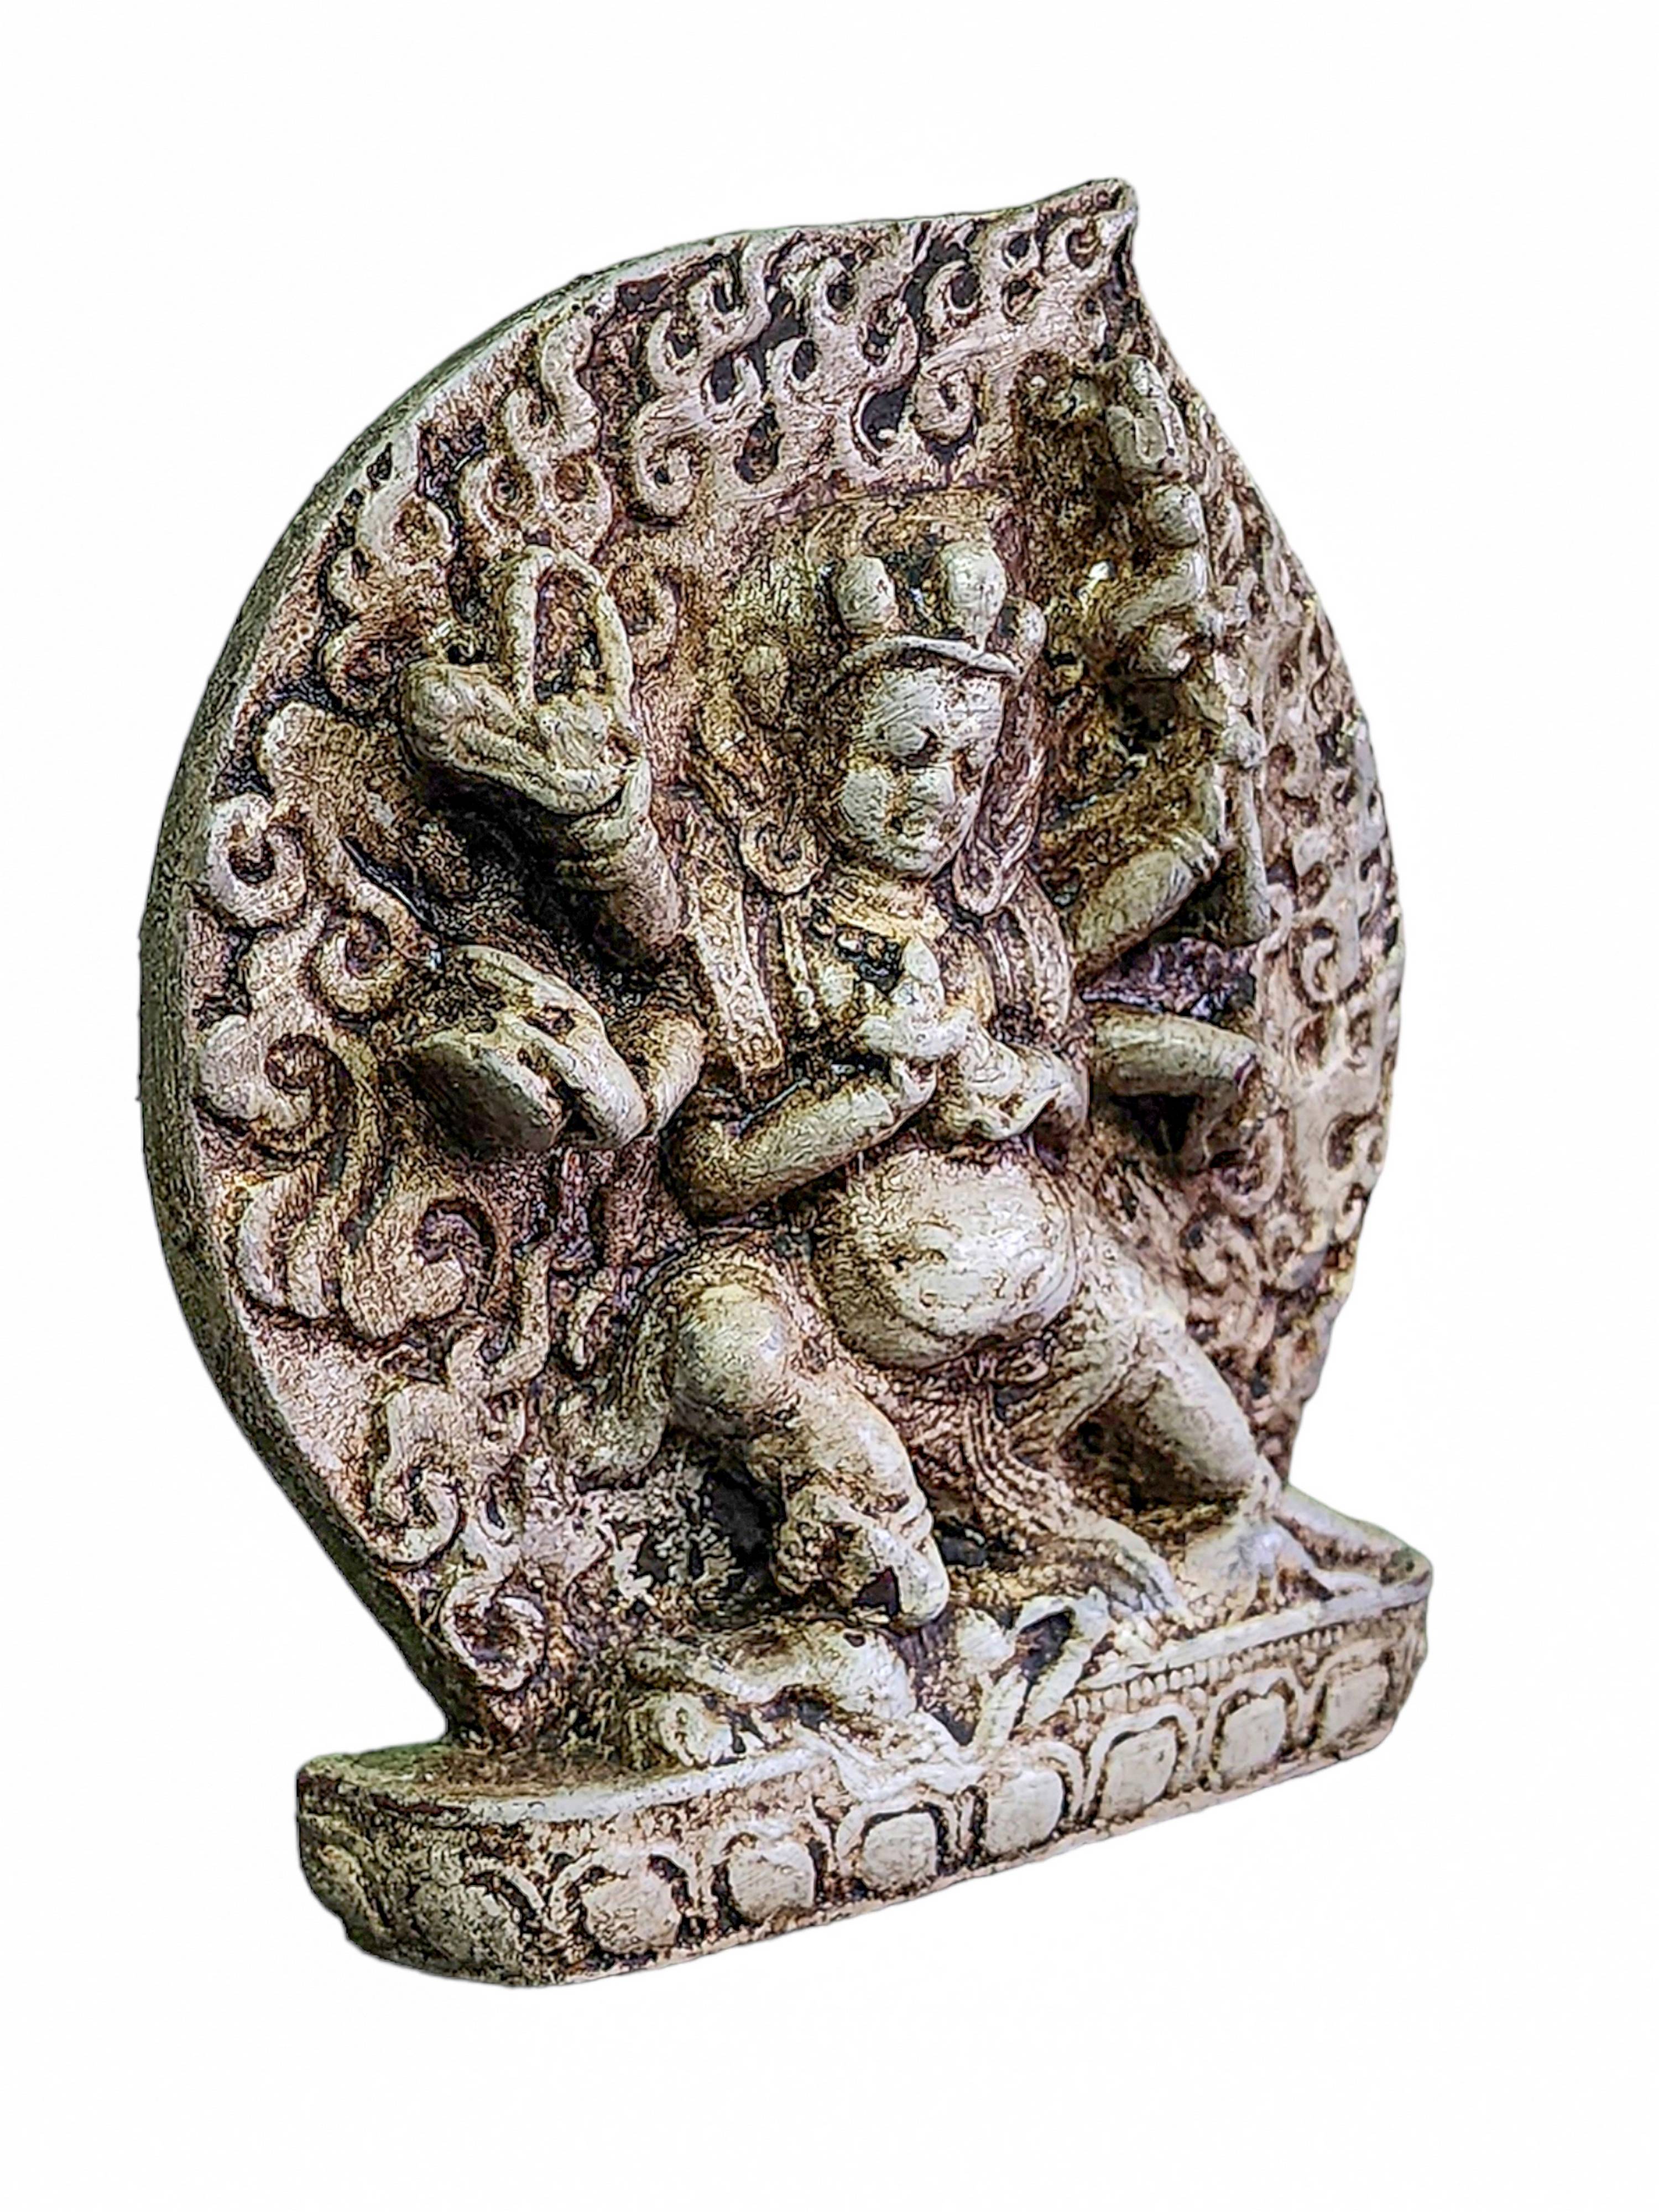 vajrapani, Buddhist Miniature Statue, resin Mold